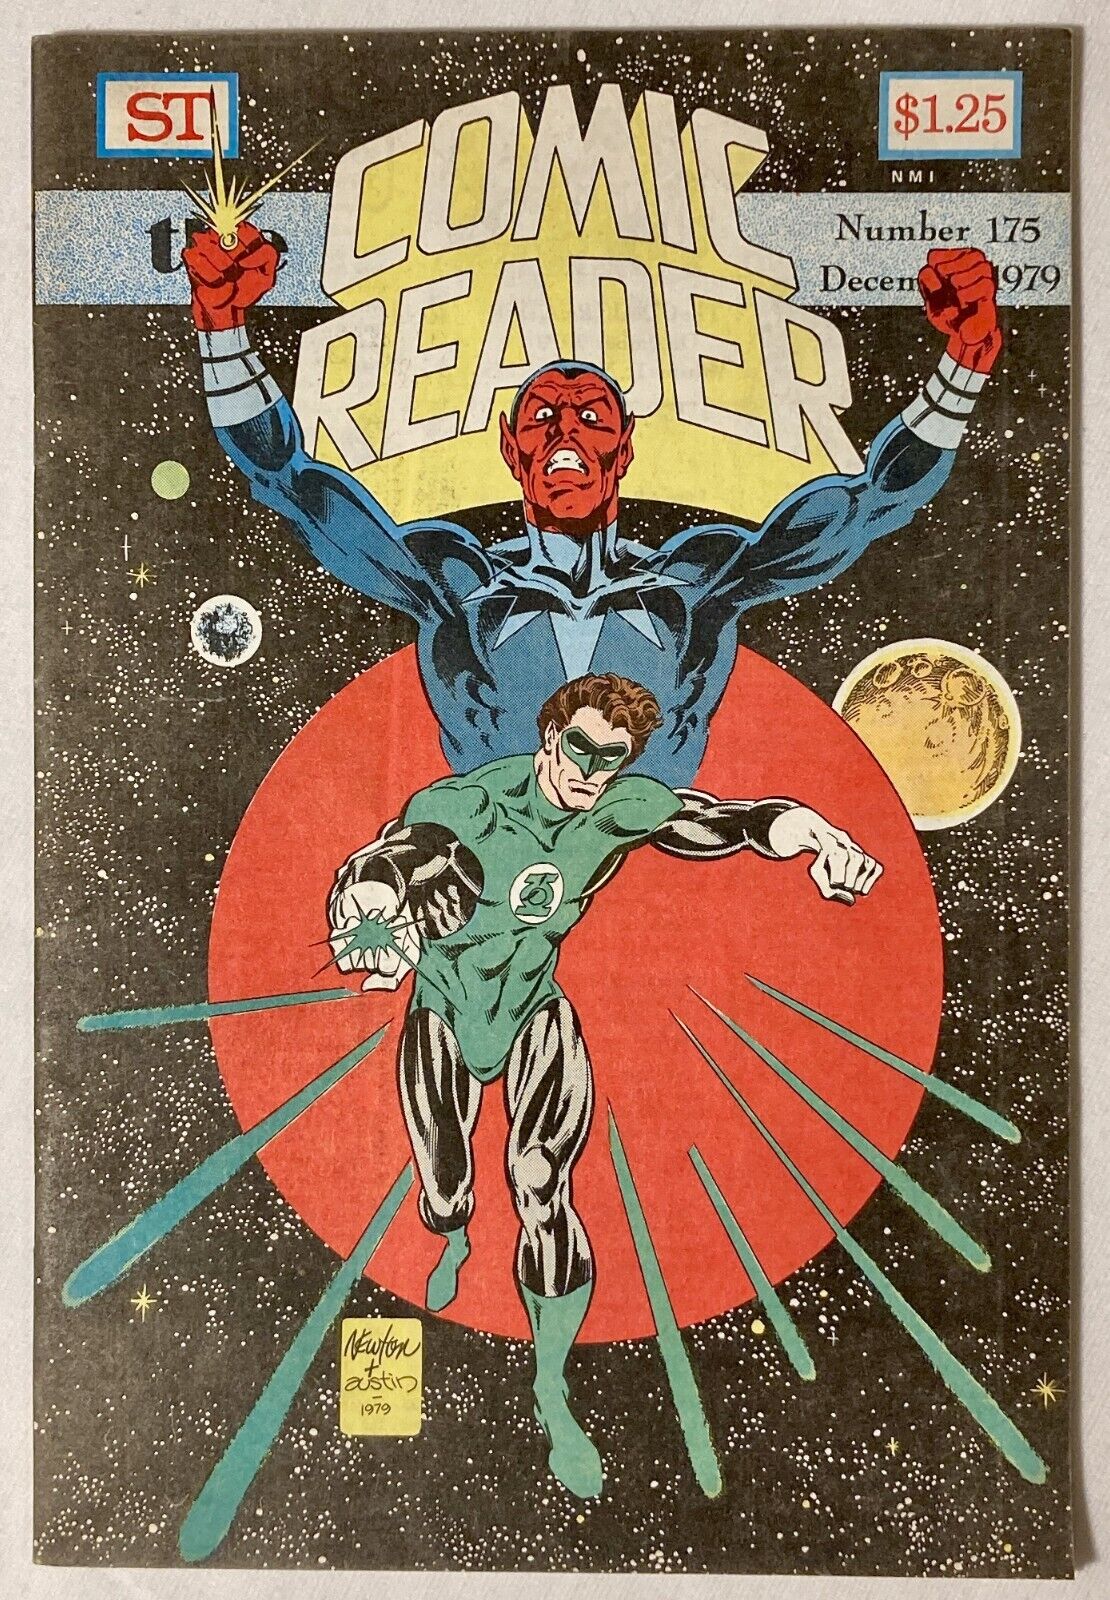 The Comic Reader #175 -- December 1979 - Green lantern & Sinestro Cover